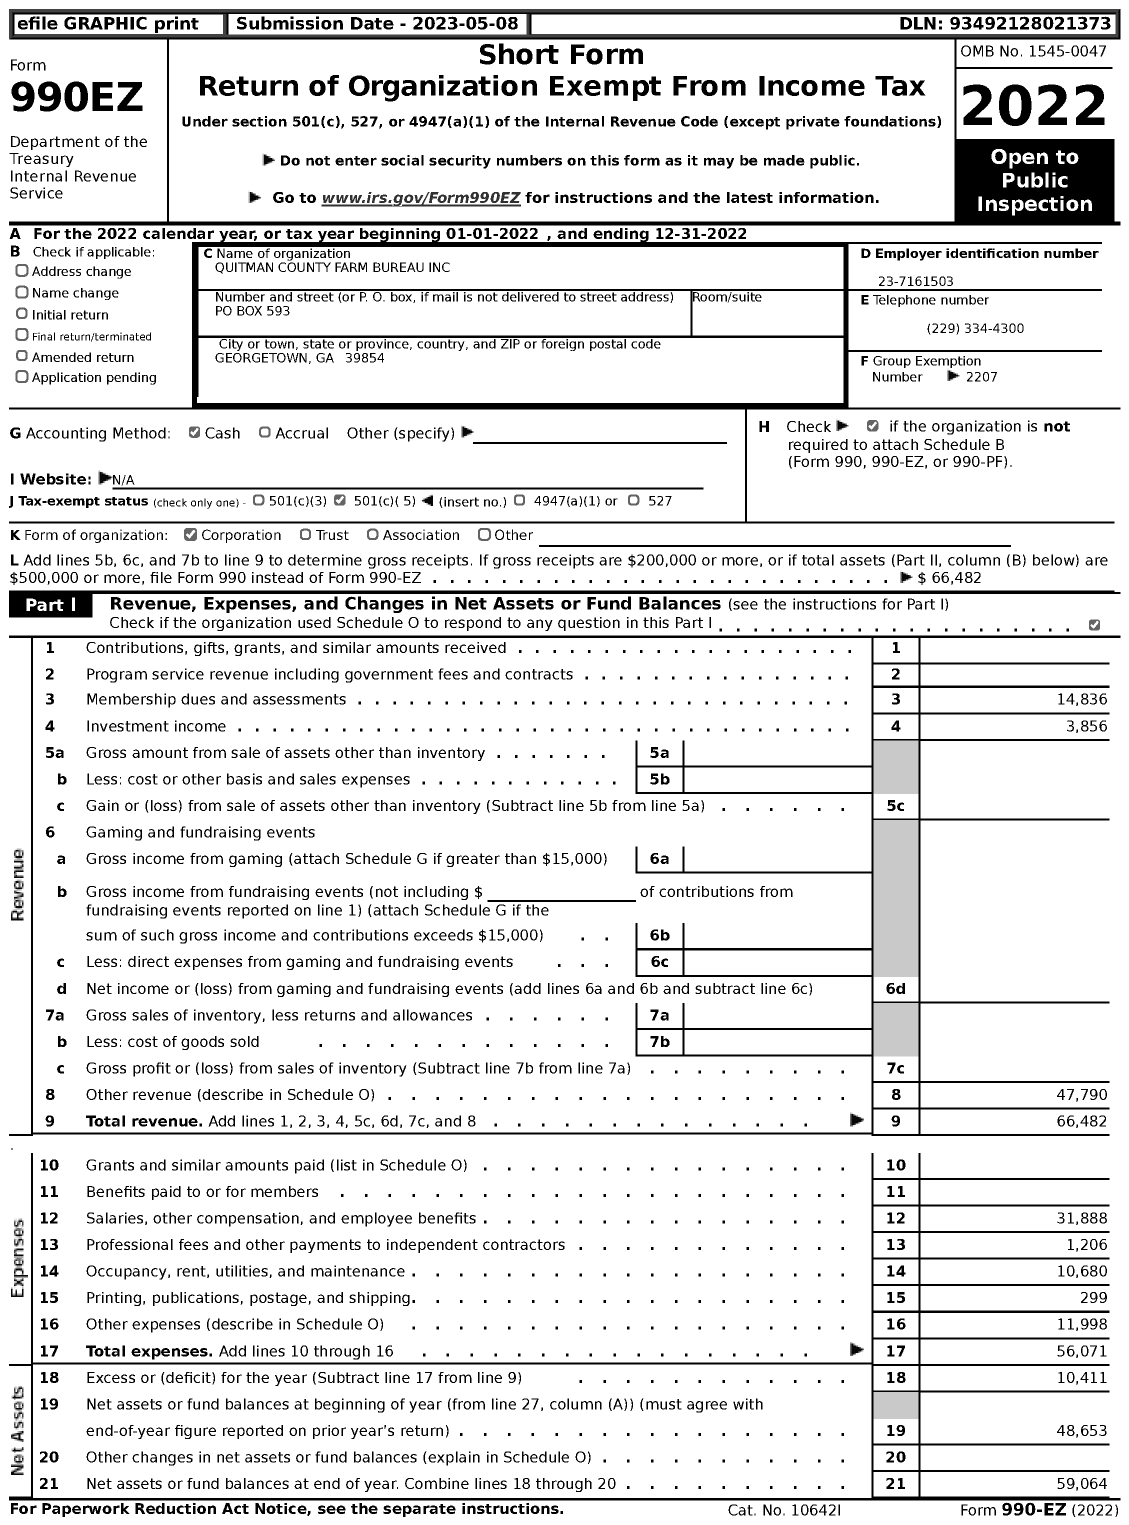 Image of first page of 2022 Form 990EZ for Georgia Farm Bureau Federation - Quitman County Farm Bureau